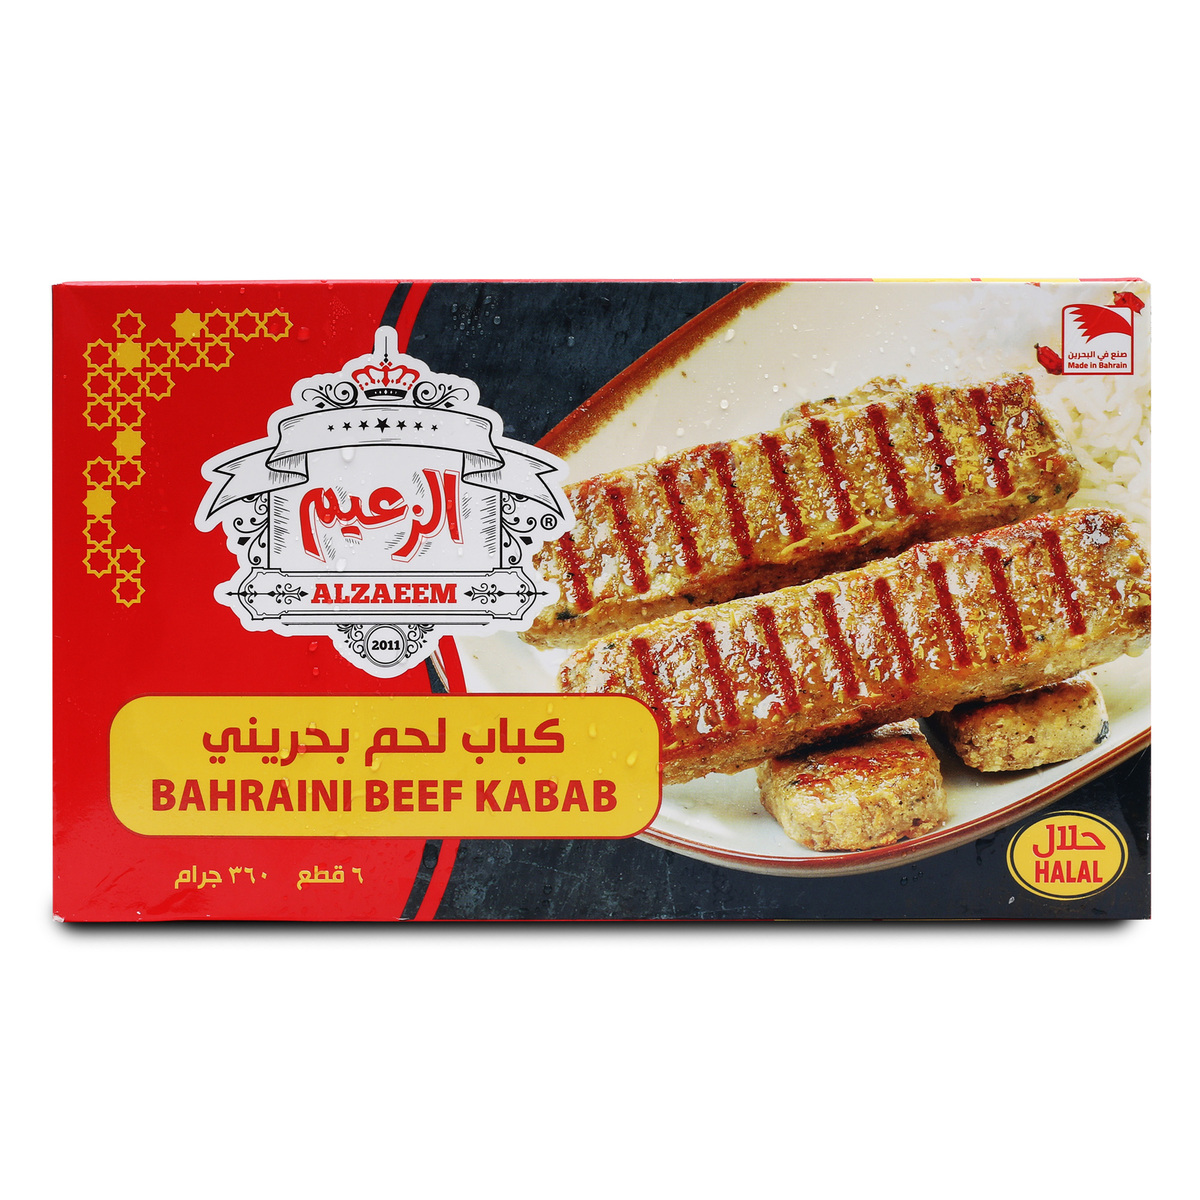 Al Zaeem Bahraini Beef Kabab 2 x 360g